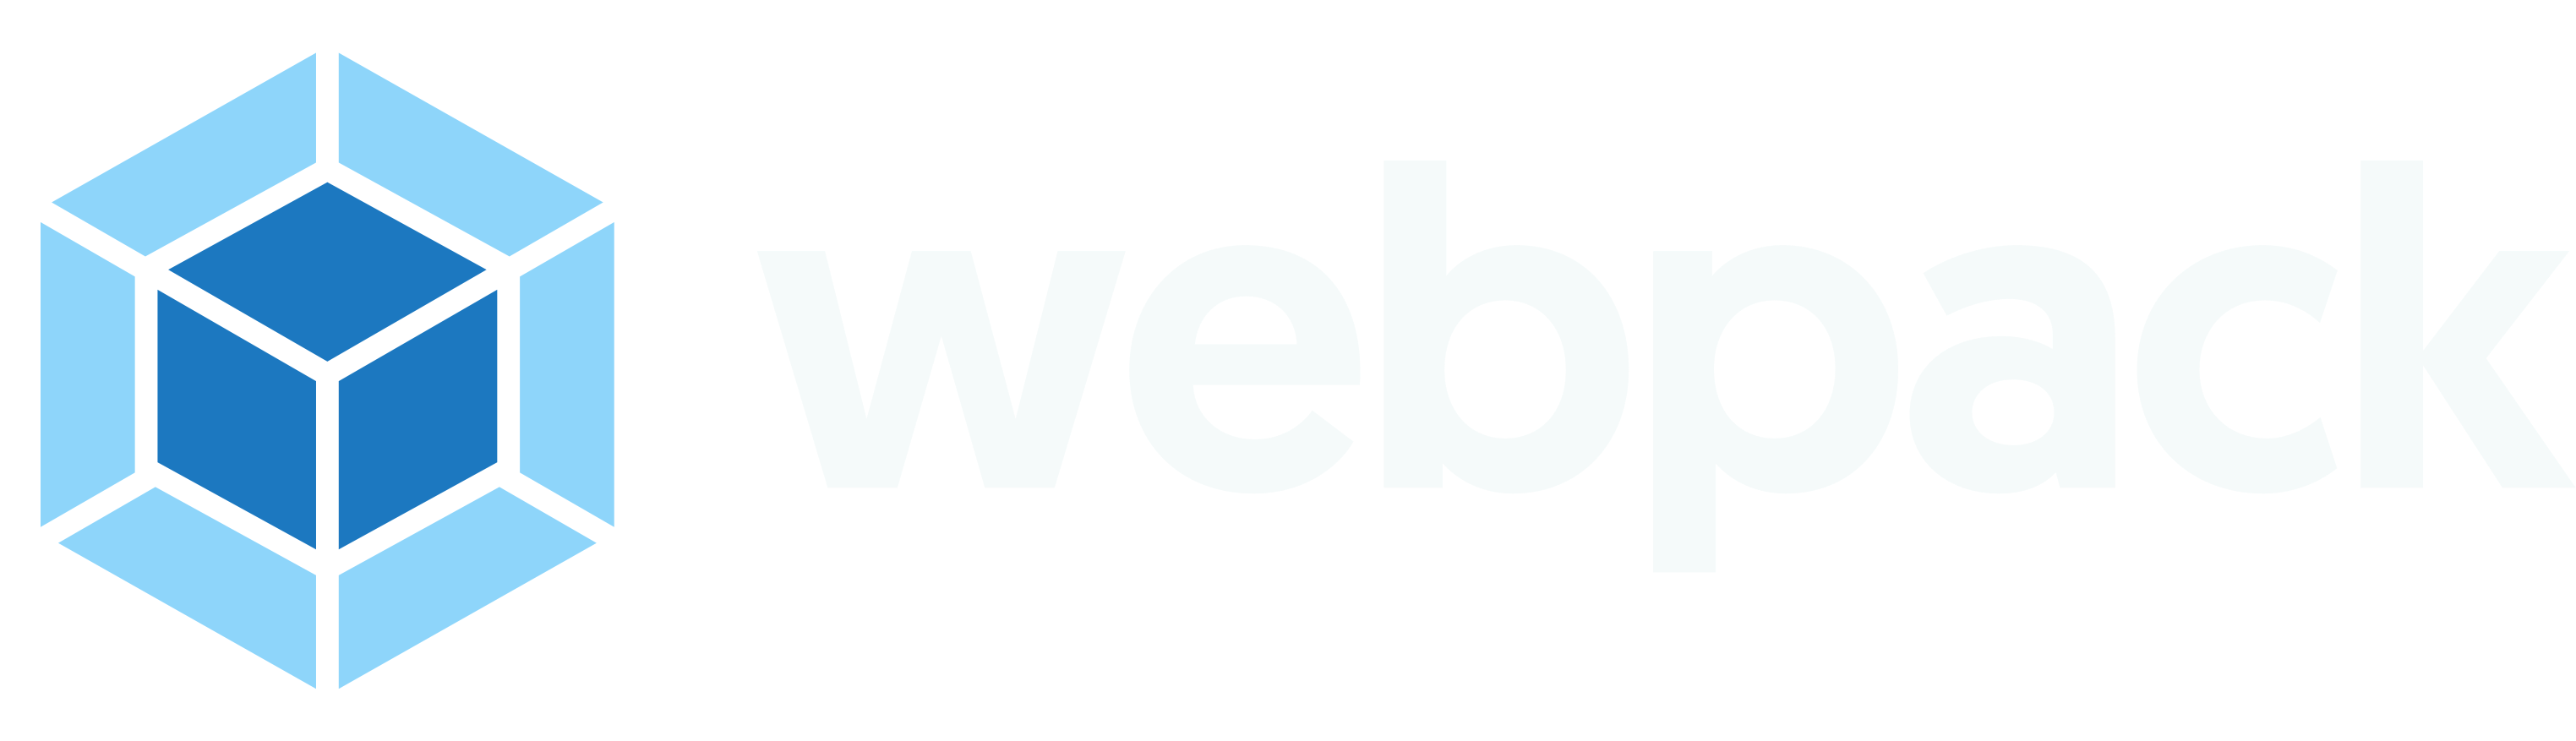 3916 X 1524 5 - Webpack Logo Webpack Clipart (3916x1524), Png Download